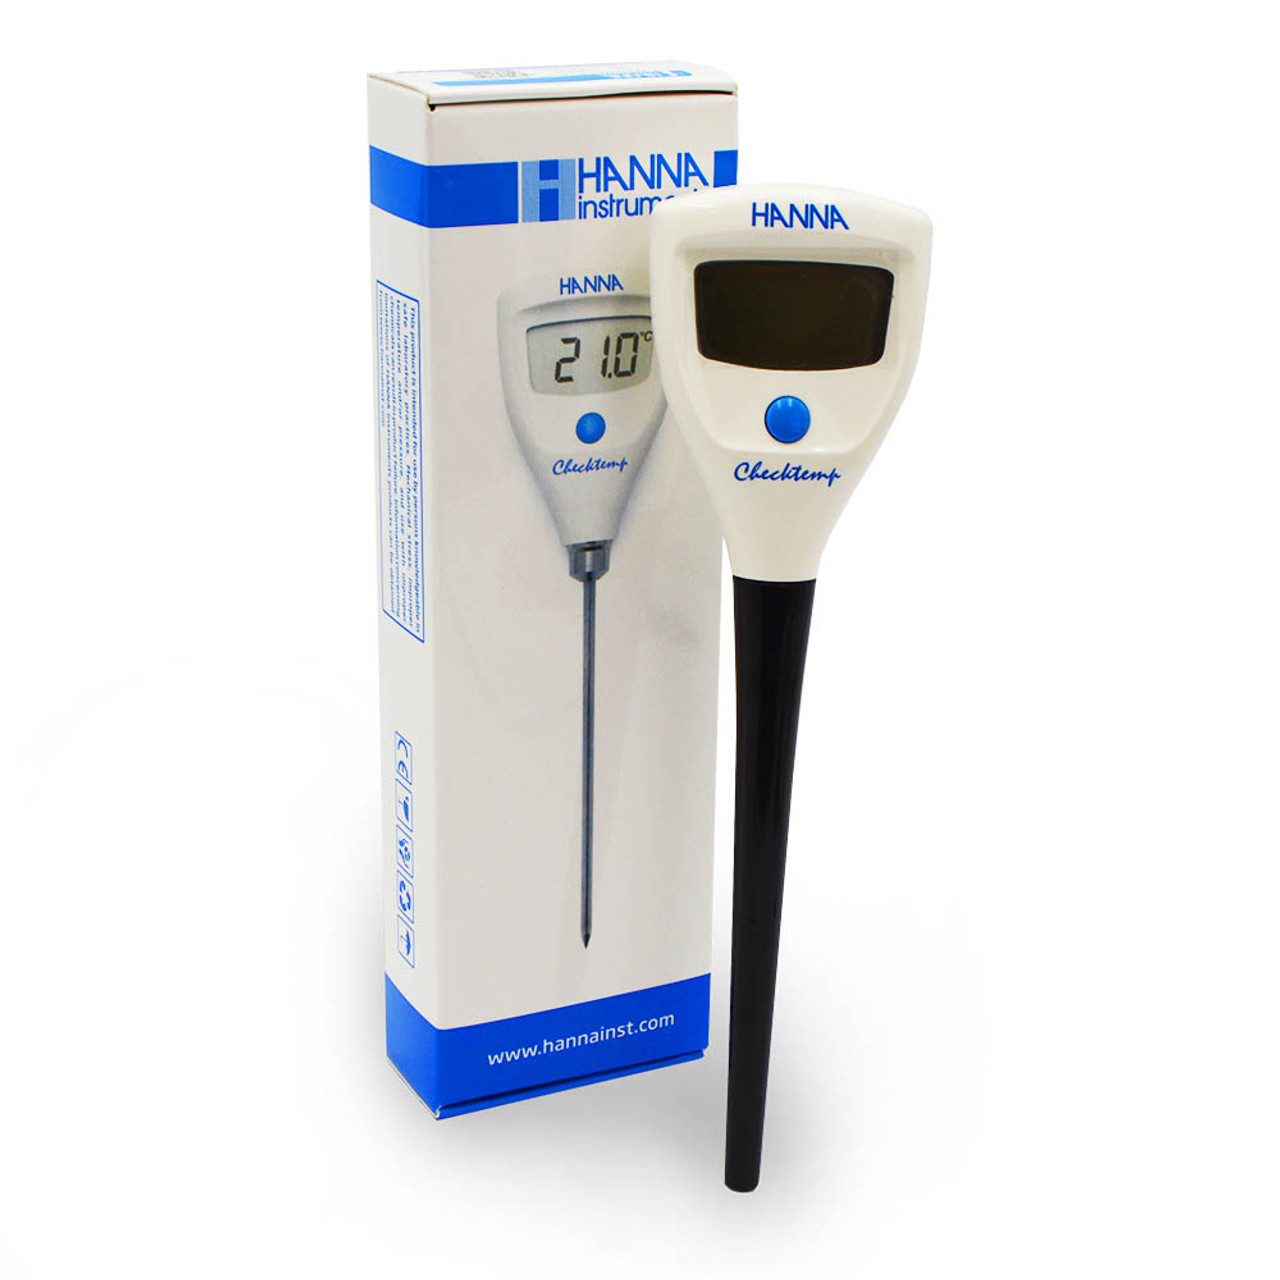 Laboratory thermometer - Checktemp® - HANNA Instruments - digital / probe